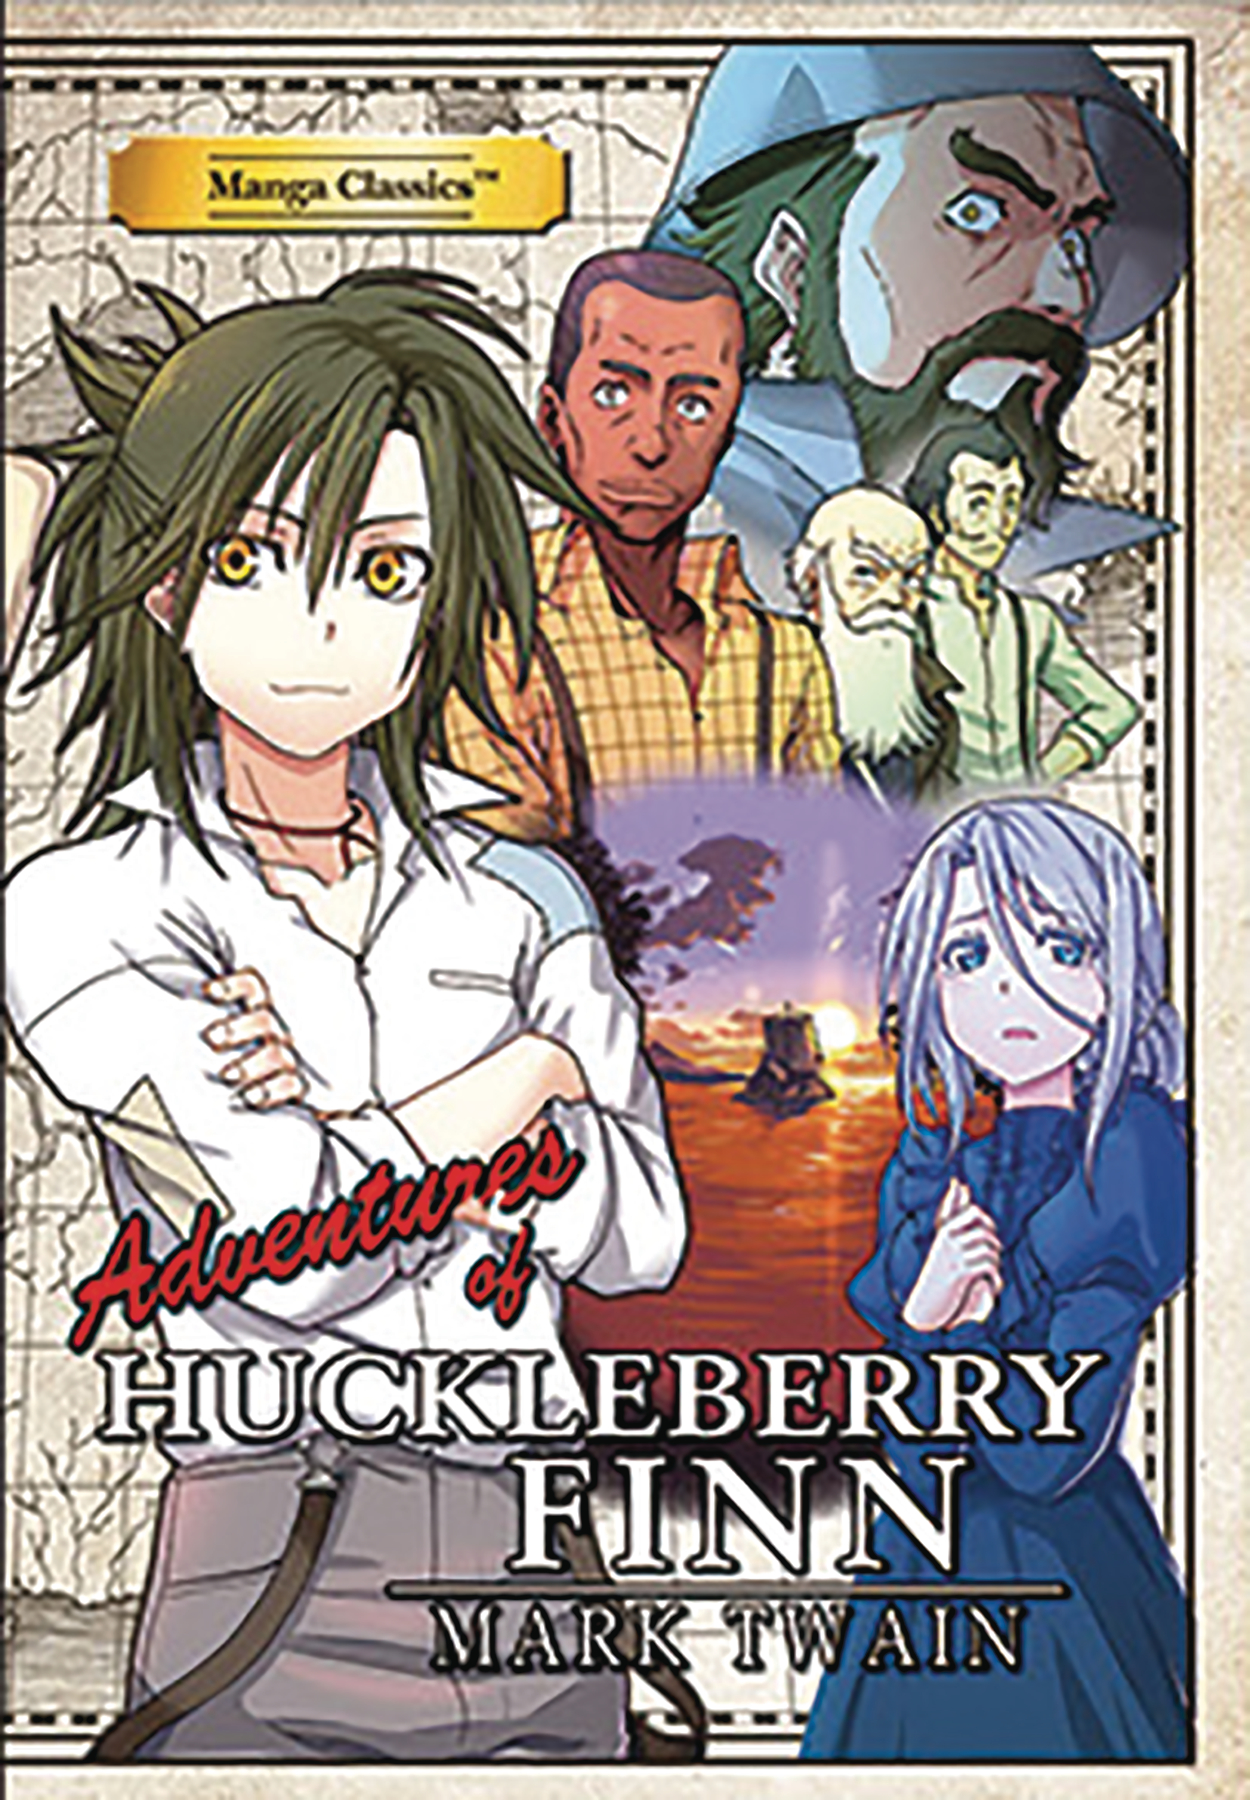 Adventures of Huckleberry Finn Manga Classics Graphic Novel